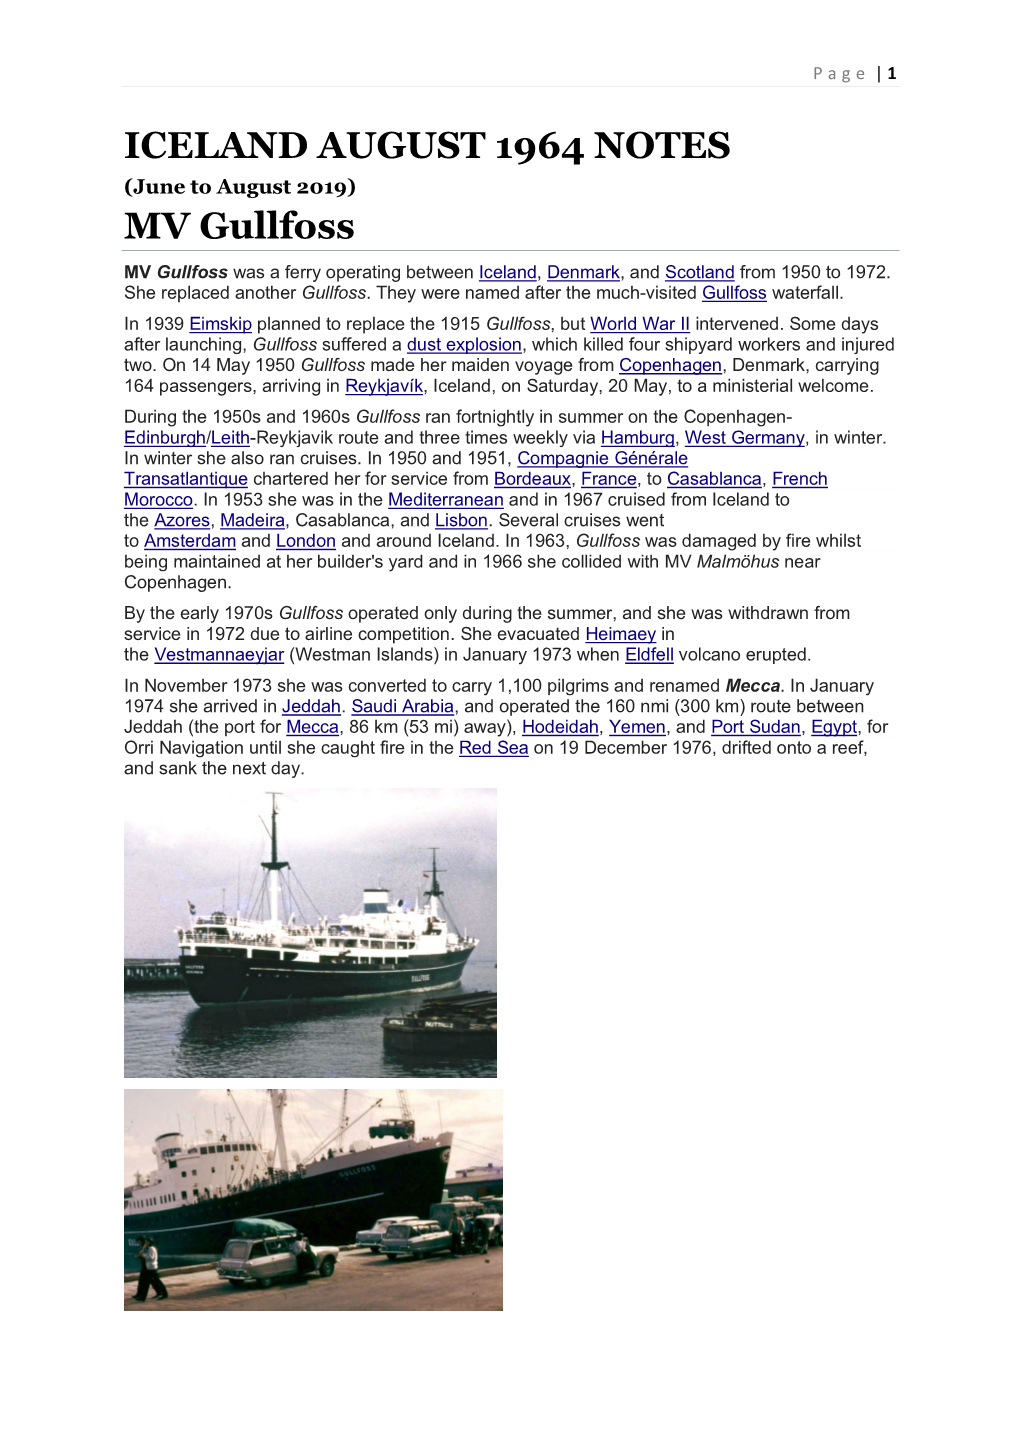 ICELAND AUGUST 1964 NOTES MV Gullfoss